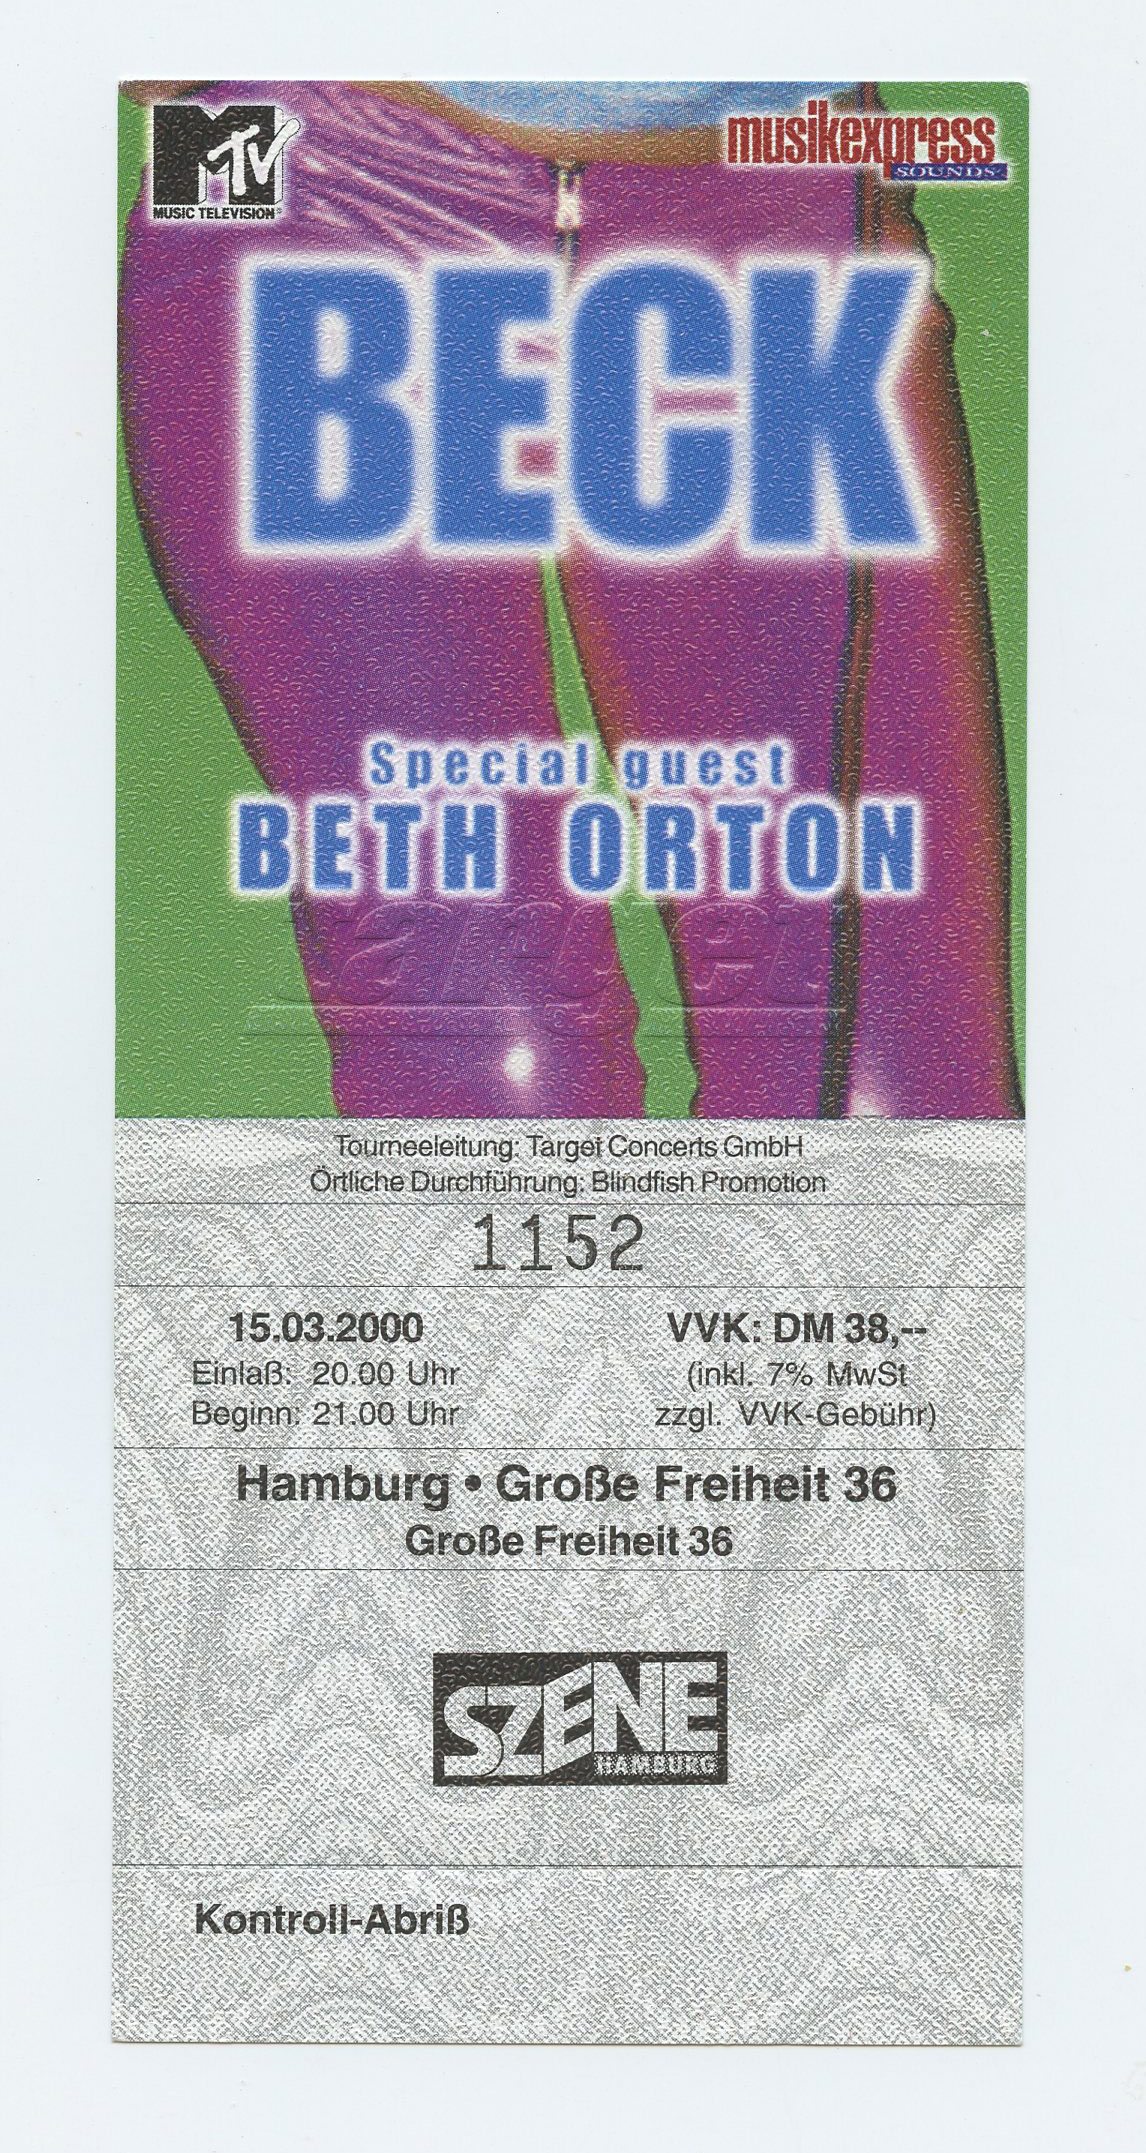 BECK Vintage Ticket 2000 Mar 15 Hamburg Germany  w/ Beth Orton